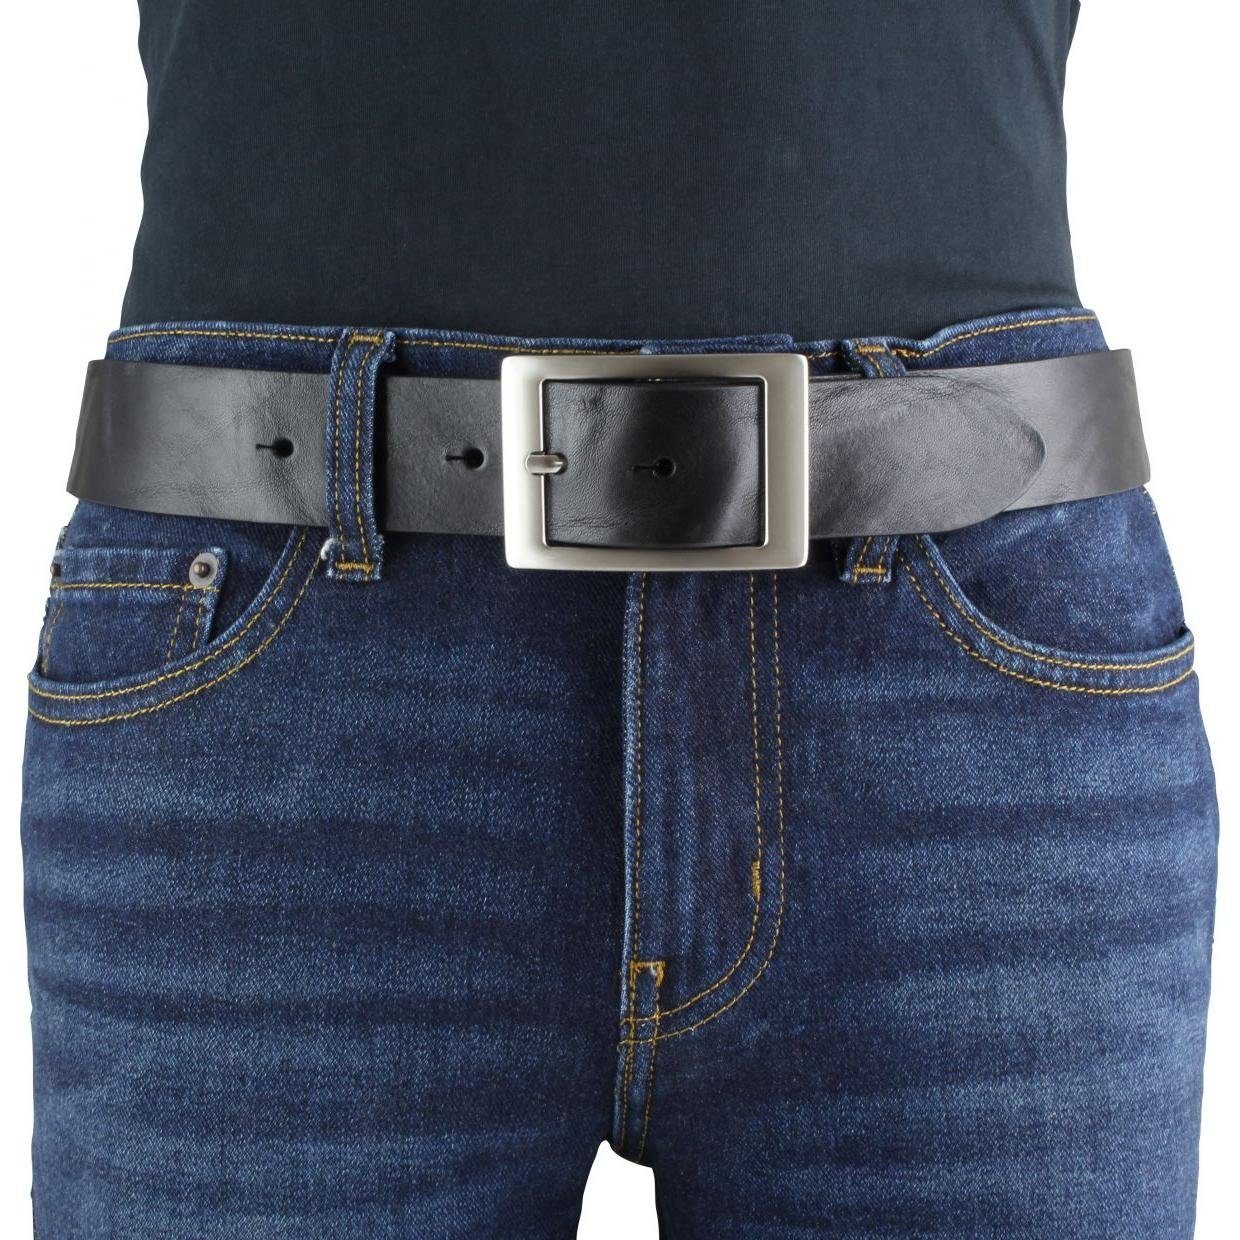 Doppel-Schließe Gürtel - Vollrindleder mit Used-Look 4 cm Ledergürtel Jeans-Gü aus Marine, Silber BELTINGER